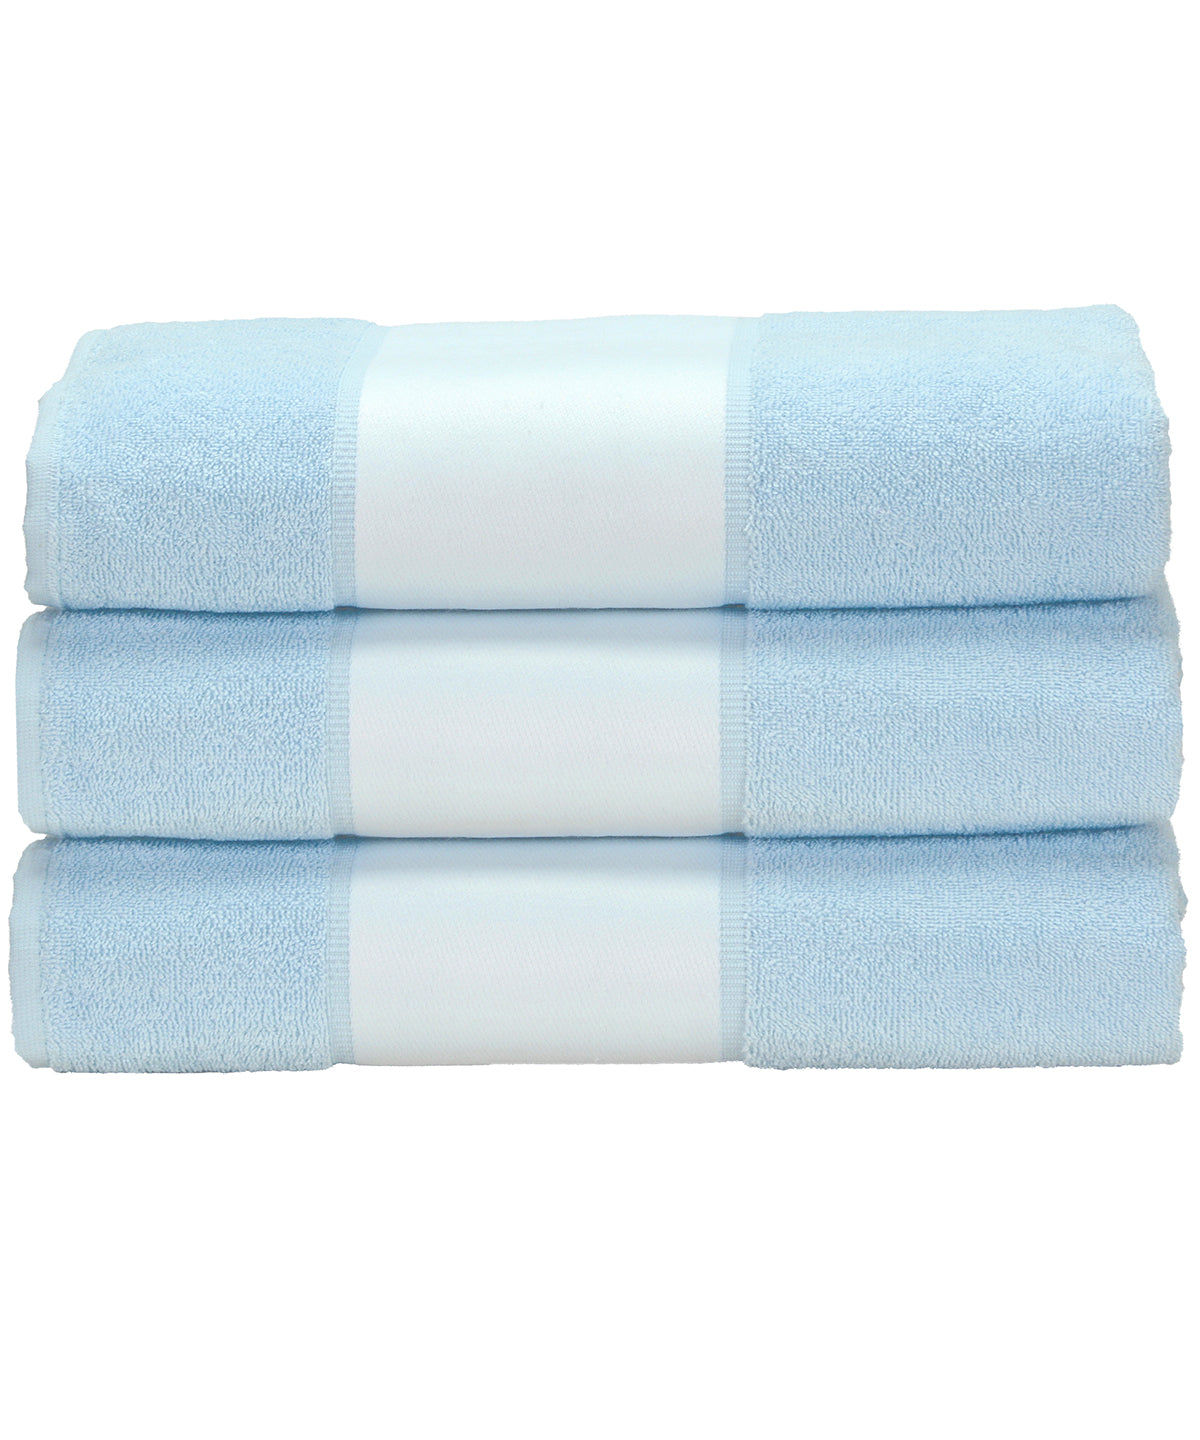 Personalised Towels - Light Blue A&R Towels ARTG® SUBLI-Me® hand towel